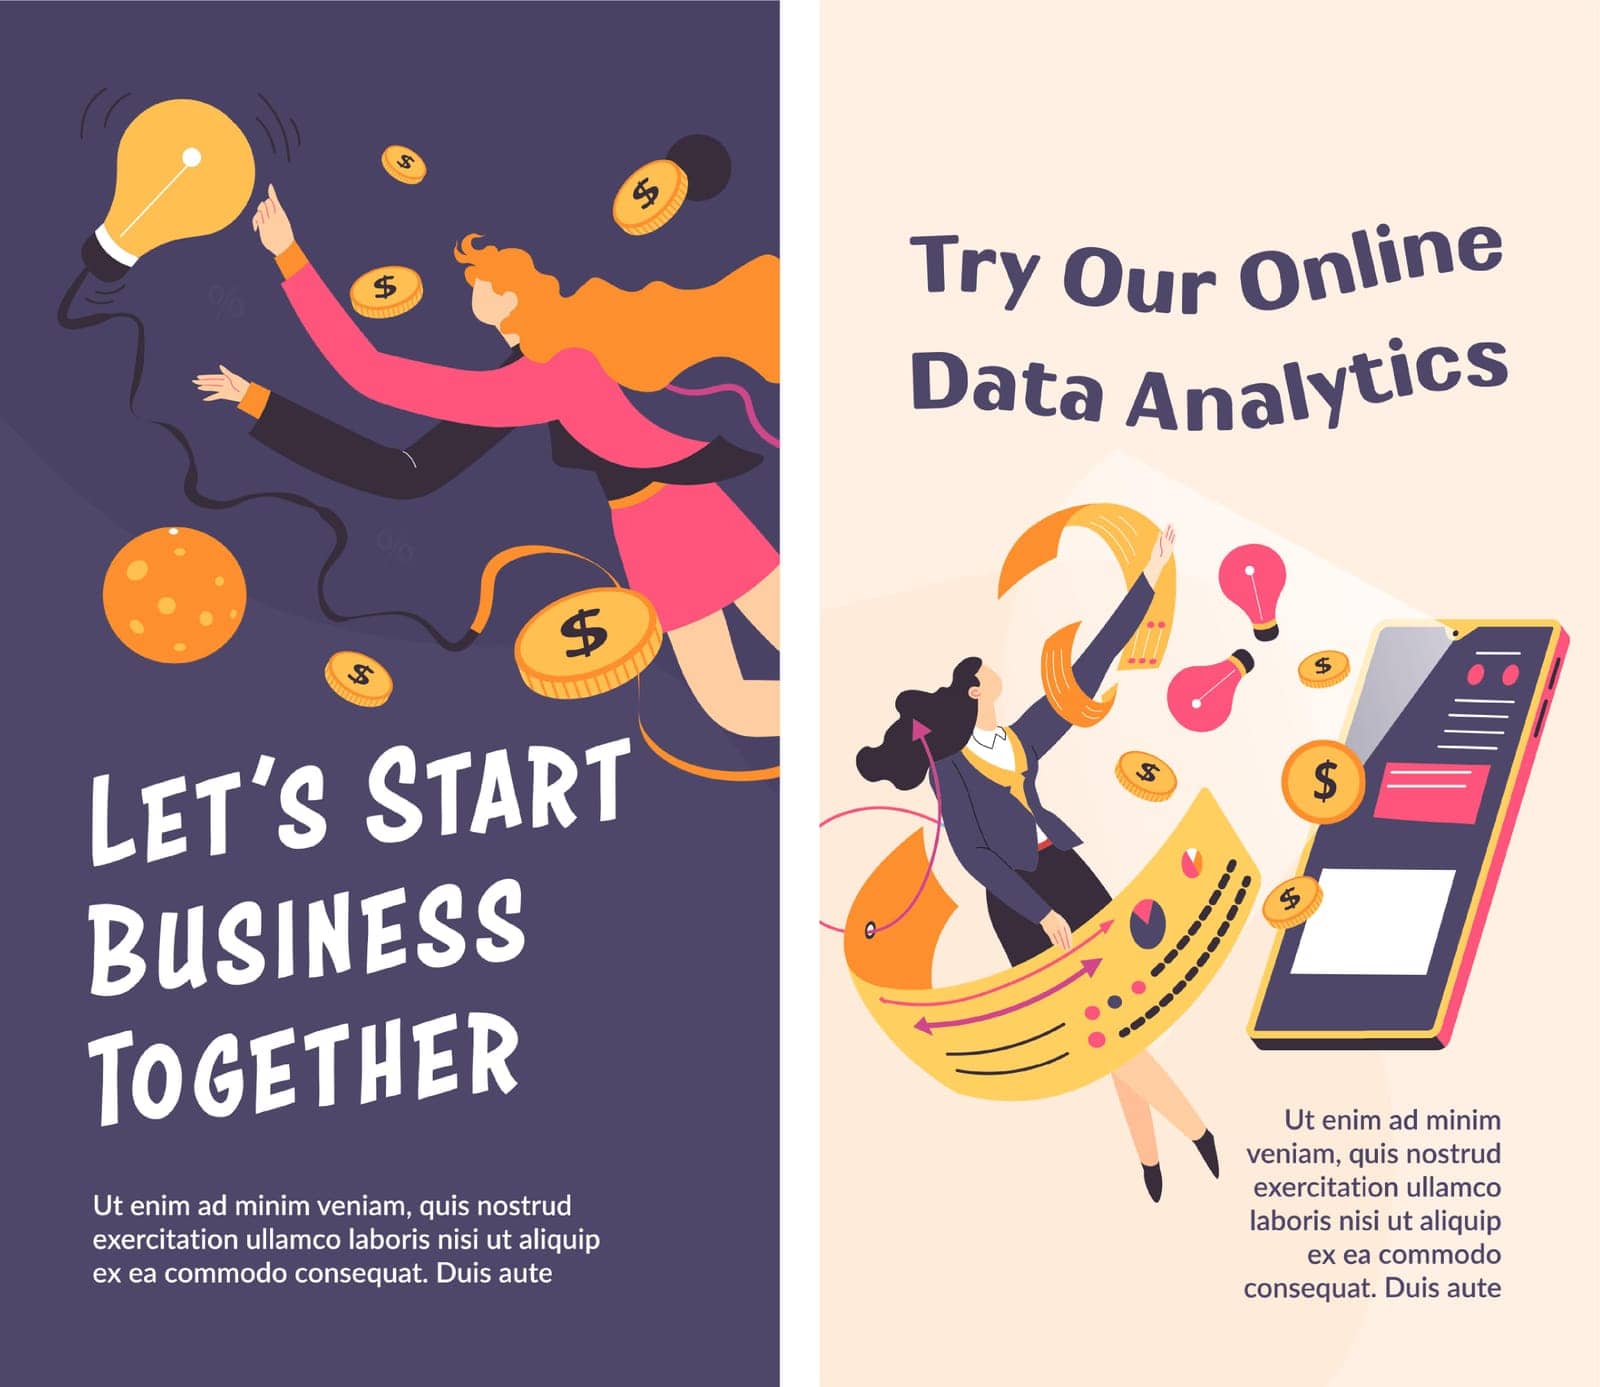 Lets start business together, online analytics by Sonulkaster